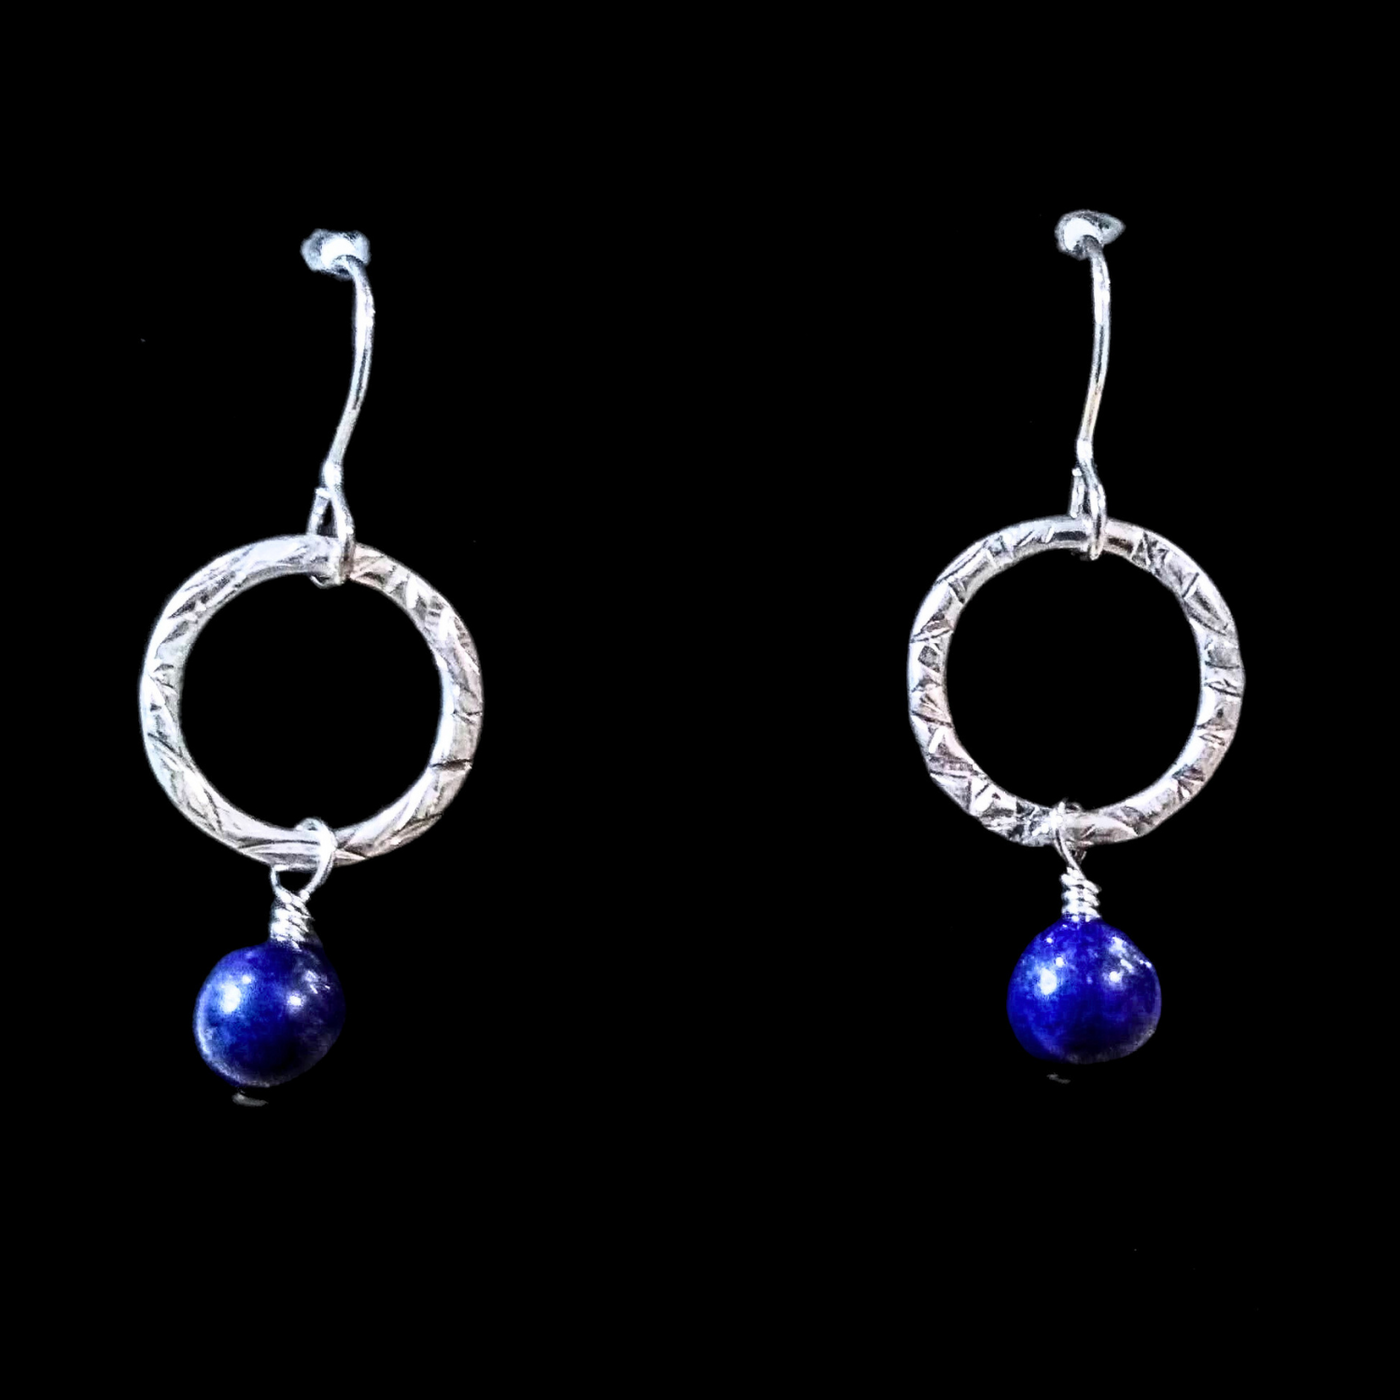 SA-039 Textured Ring w/Lapis Earrings